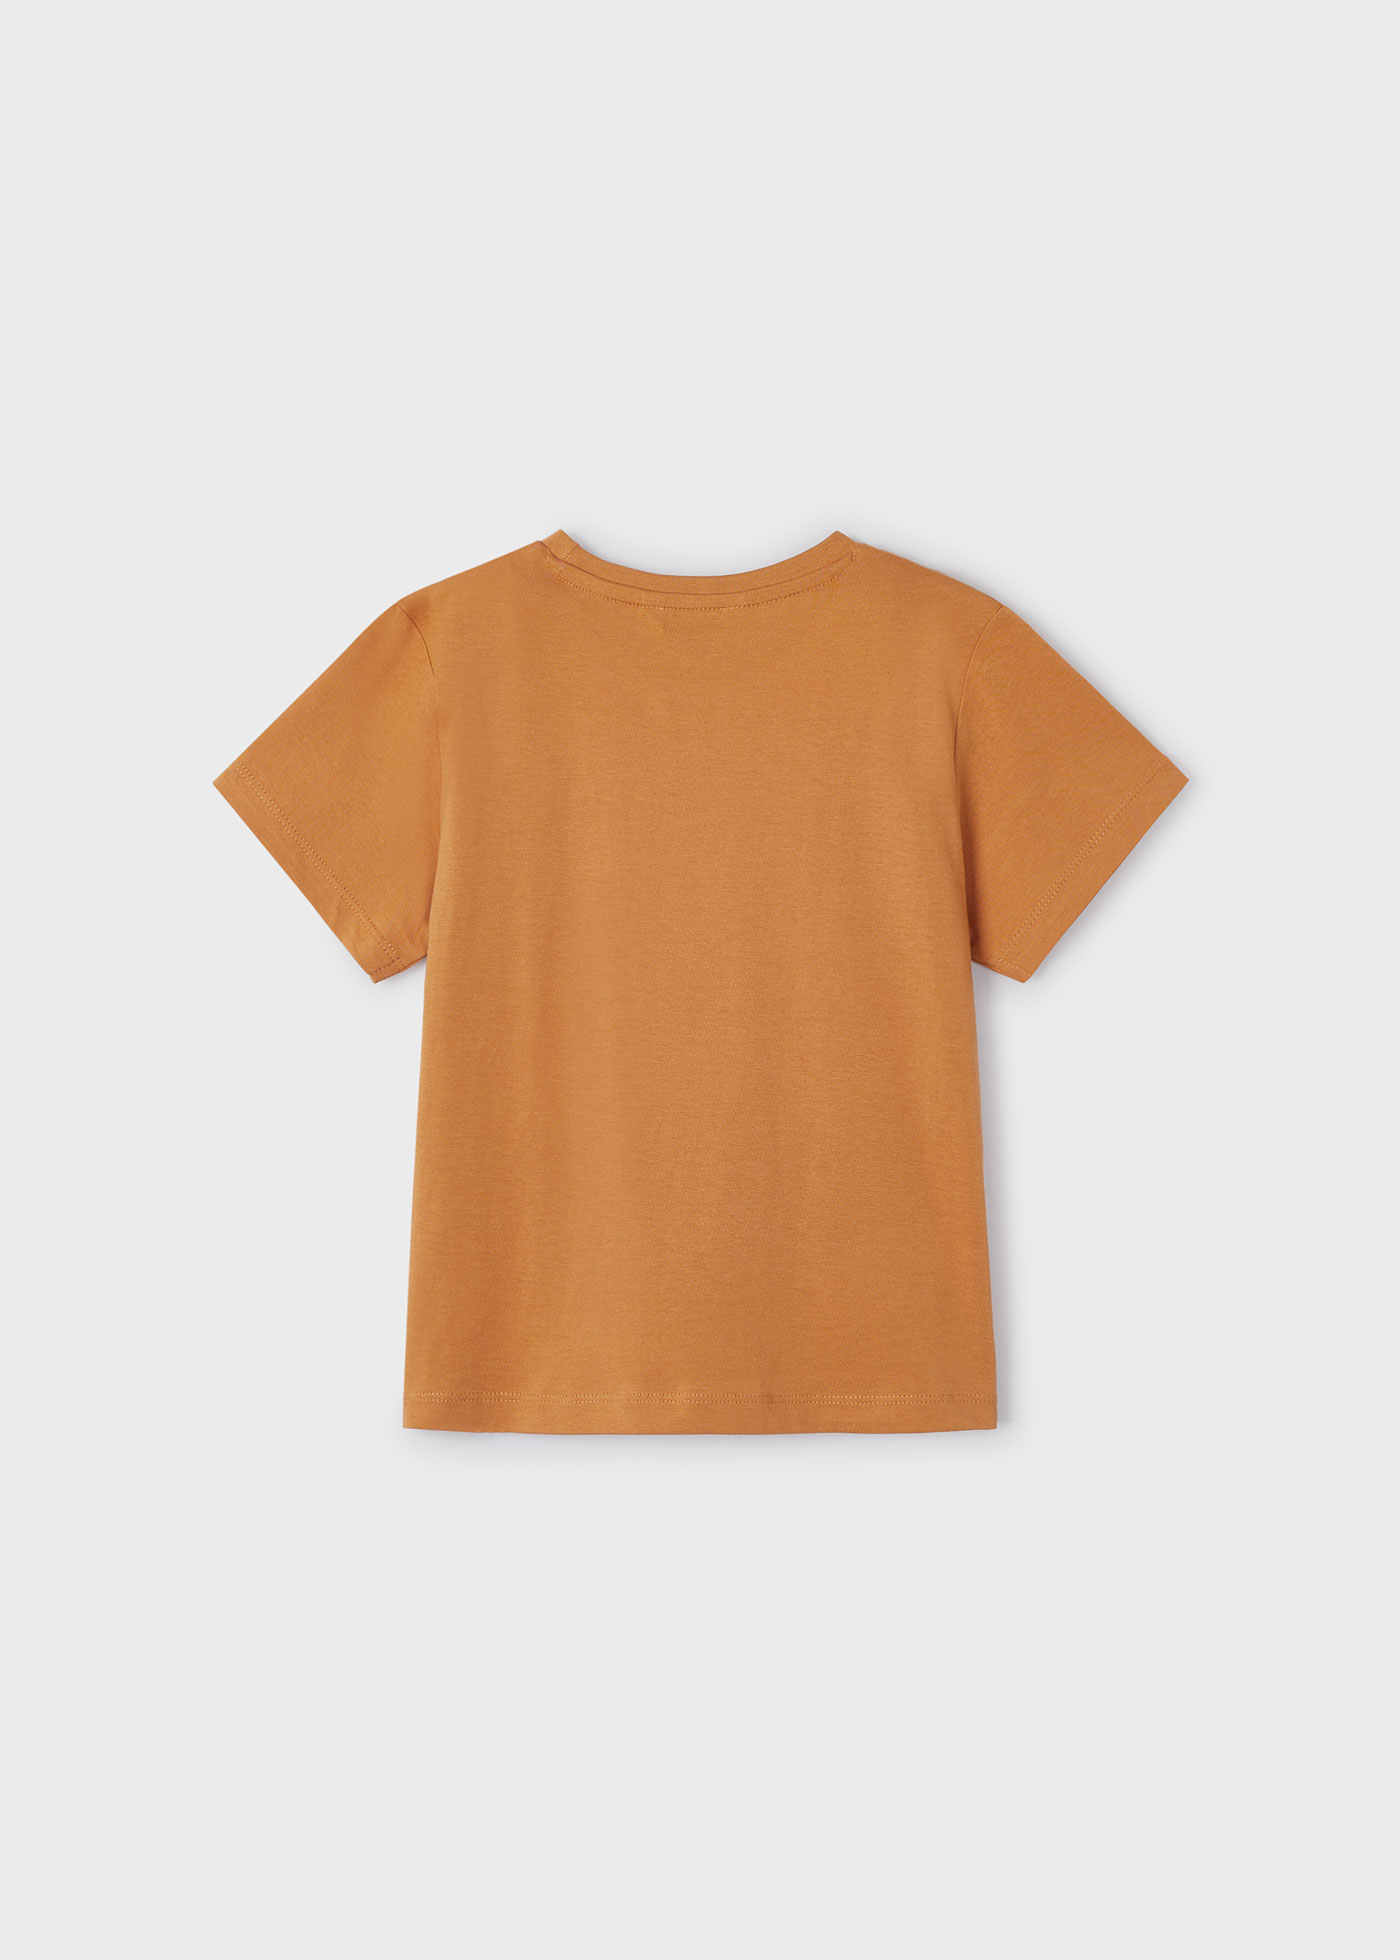 Camiseta manga corta scl para niño de Mayoral modelo3024